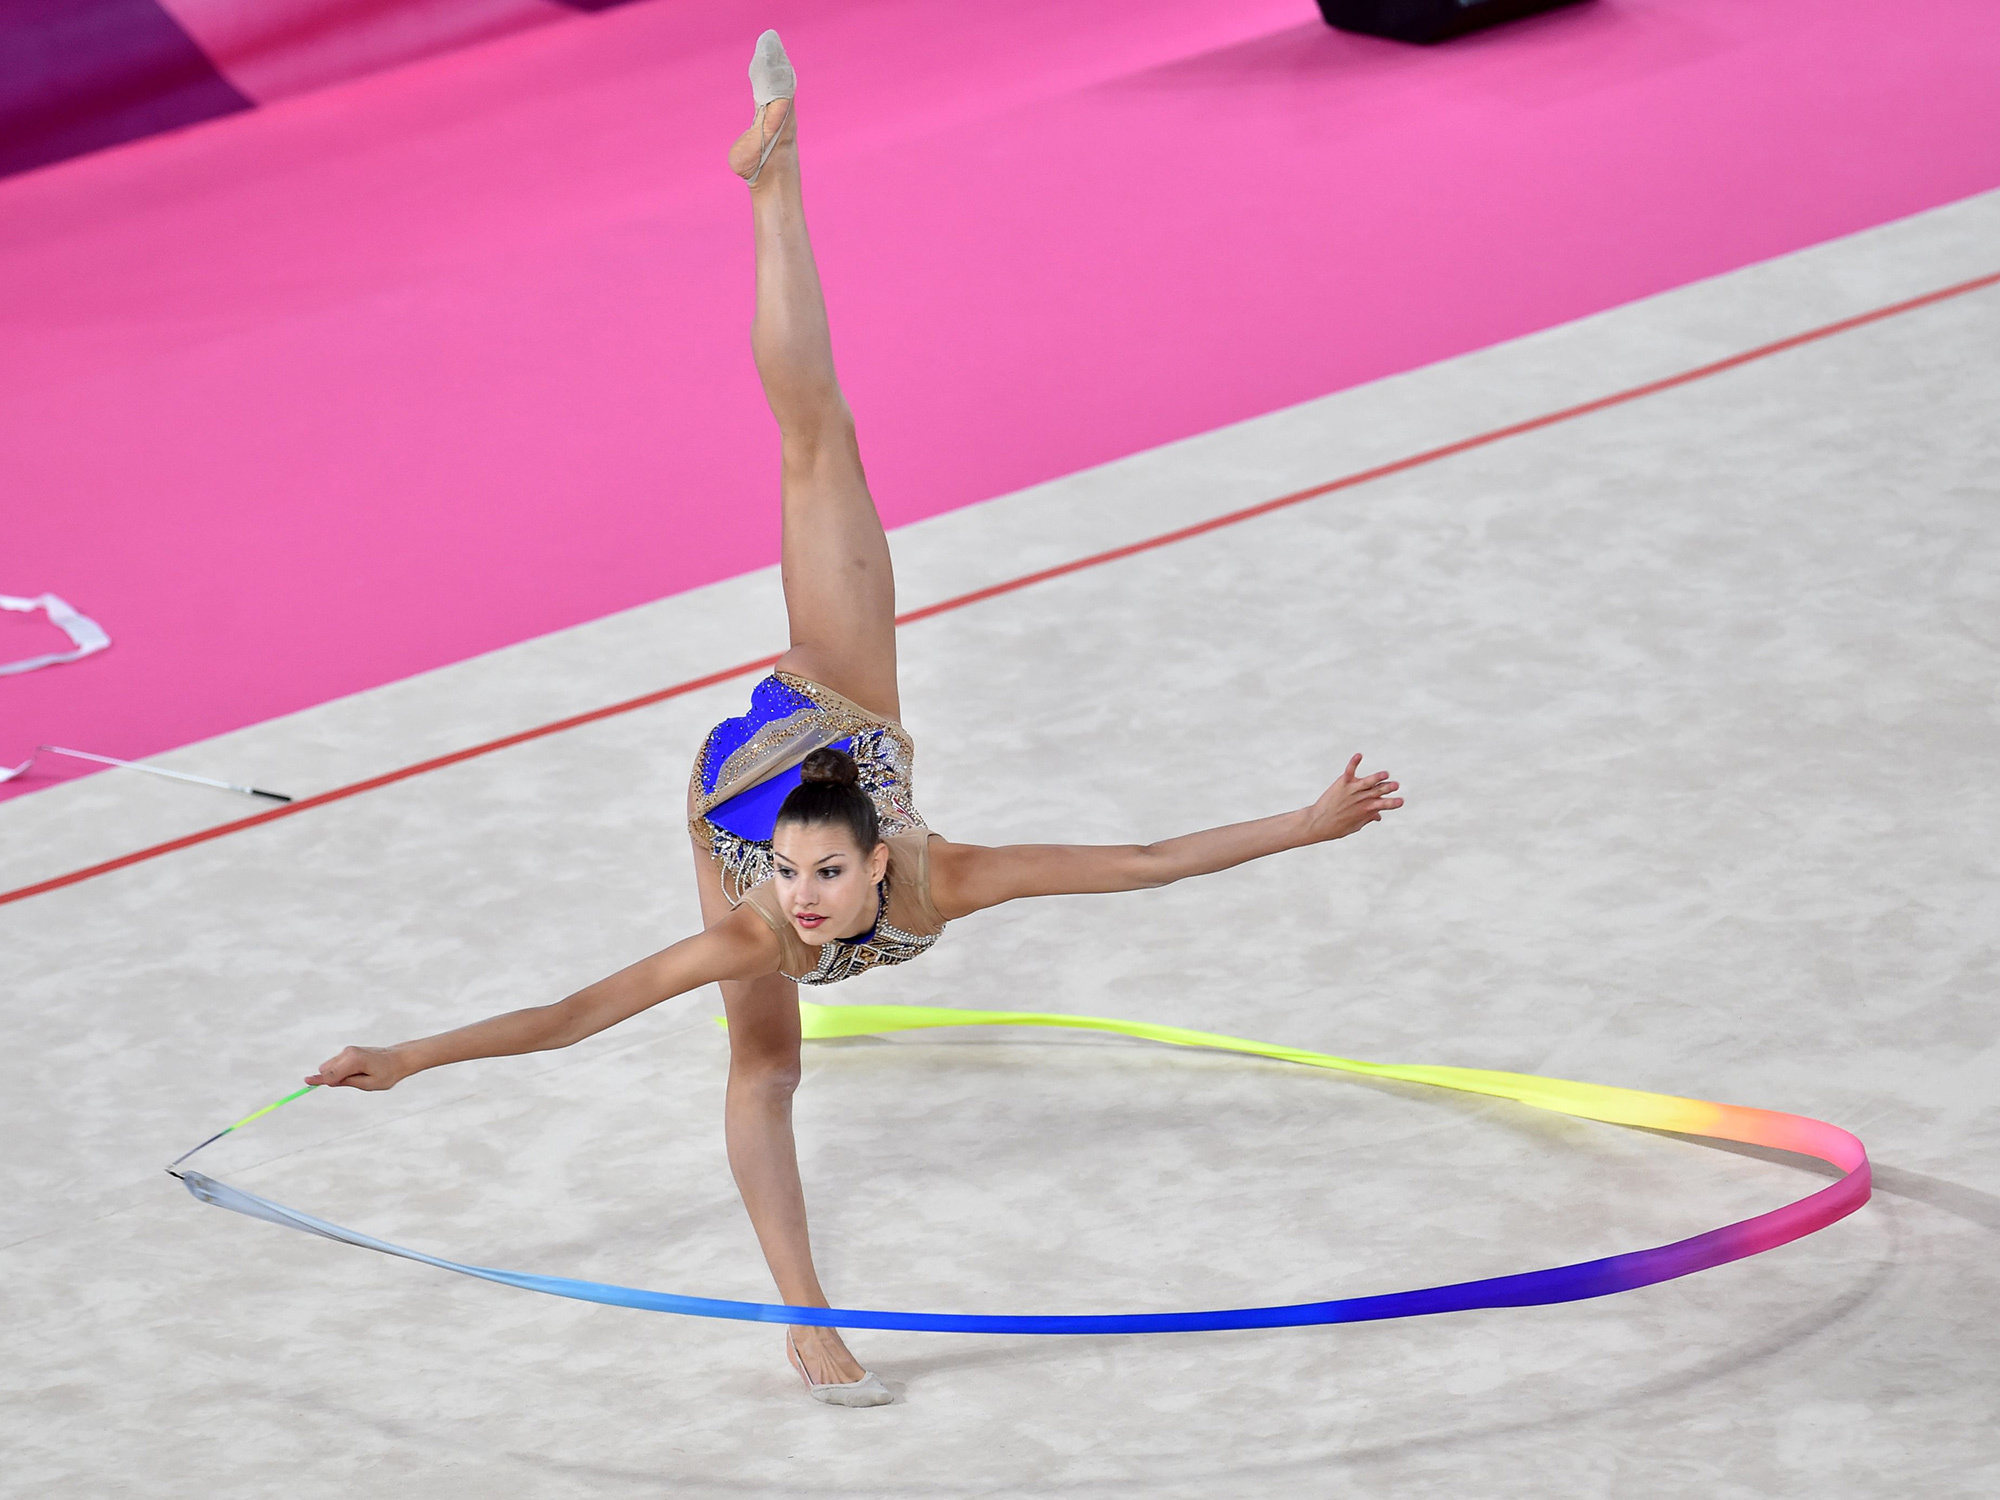 Rhythmic Gymnastics: Evita Griskenas, An American individual gymnast, The most decorated athlete at the 2019 Pan American Games. 2000x1500 HD Wallpaper.